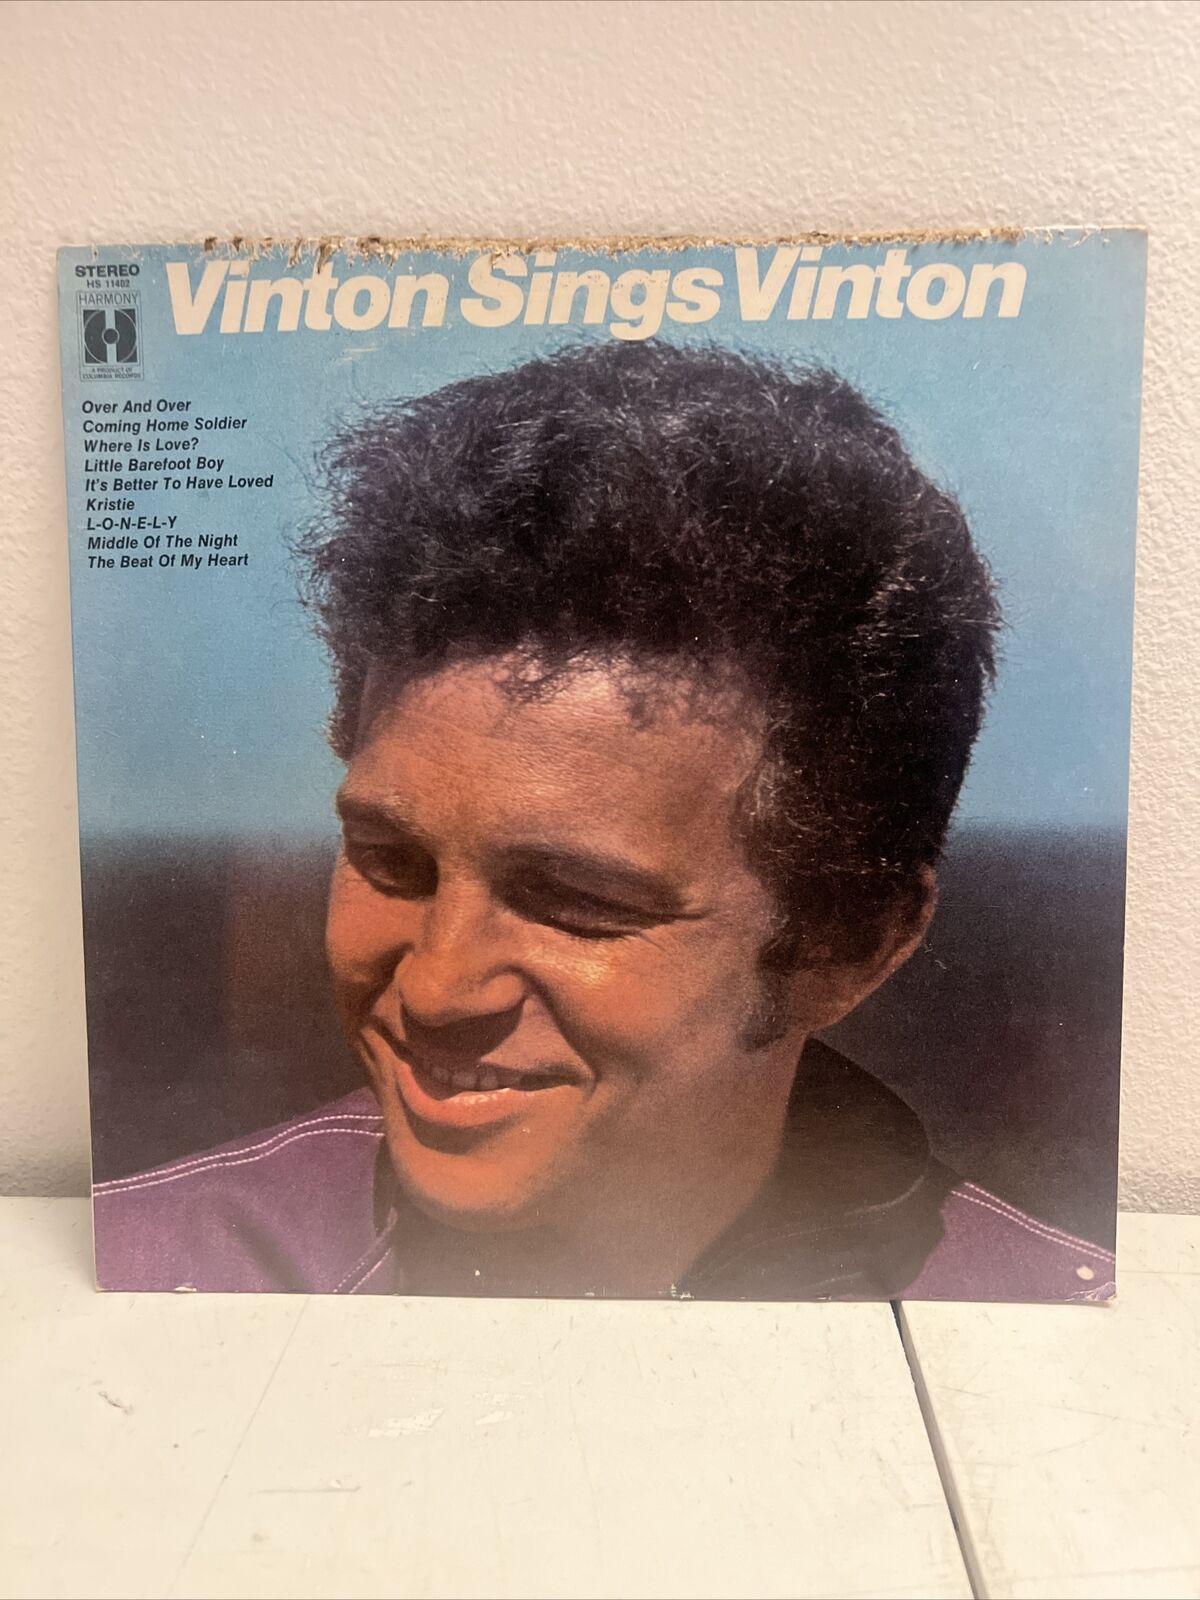 Bobby Vinton - Vinton Sings Vinton Harmony 1970 HS 11402 LP Stereo Vinyl LP